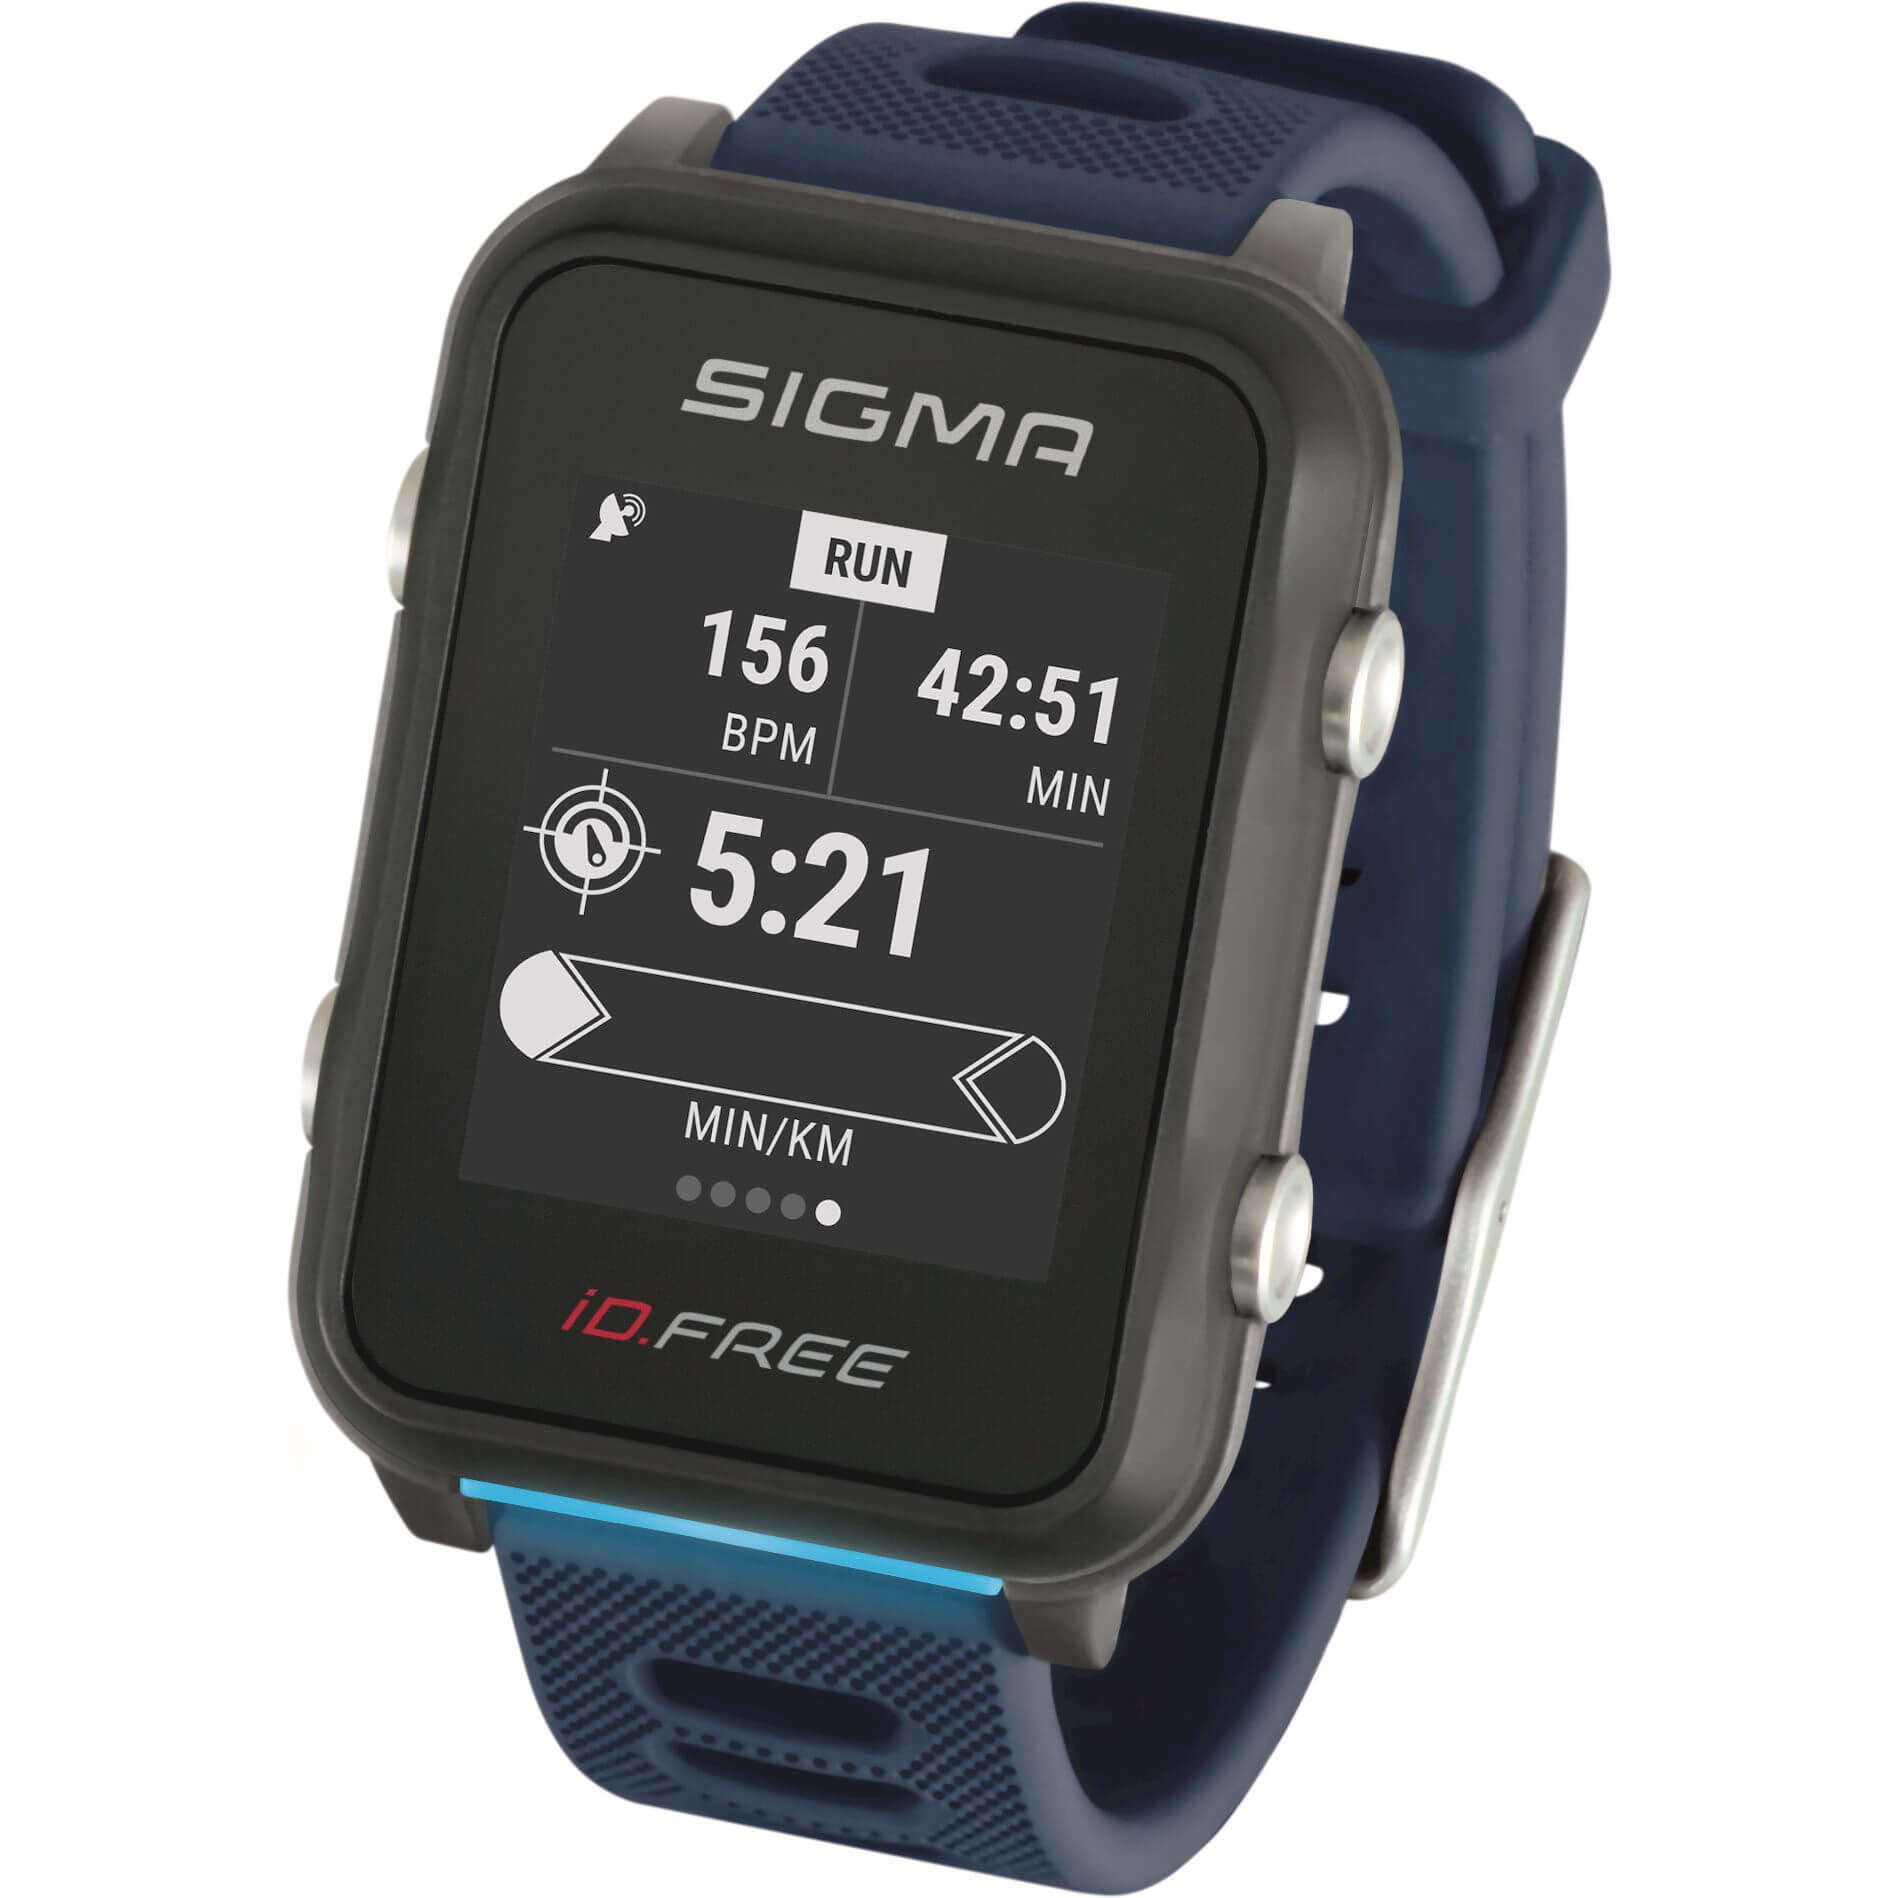 Sigma Sport iD.FREE GPS Sporthorloge Blauw